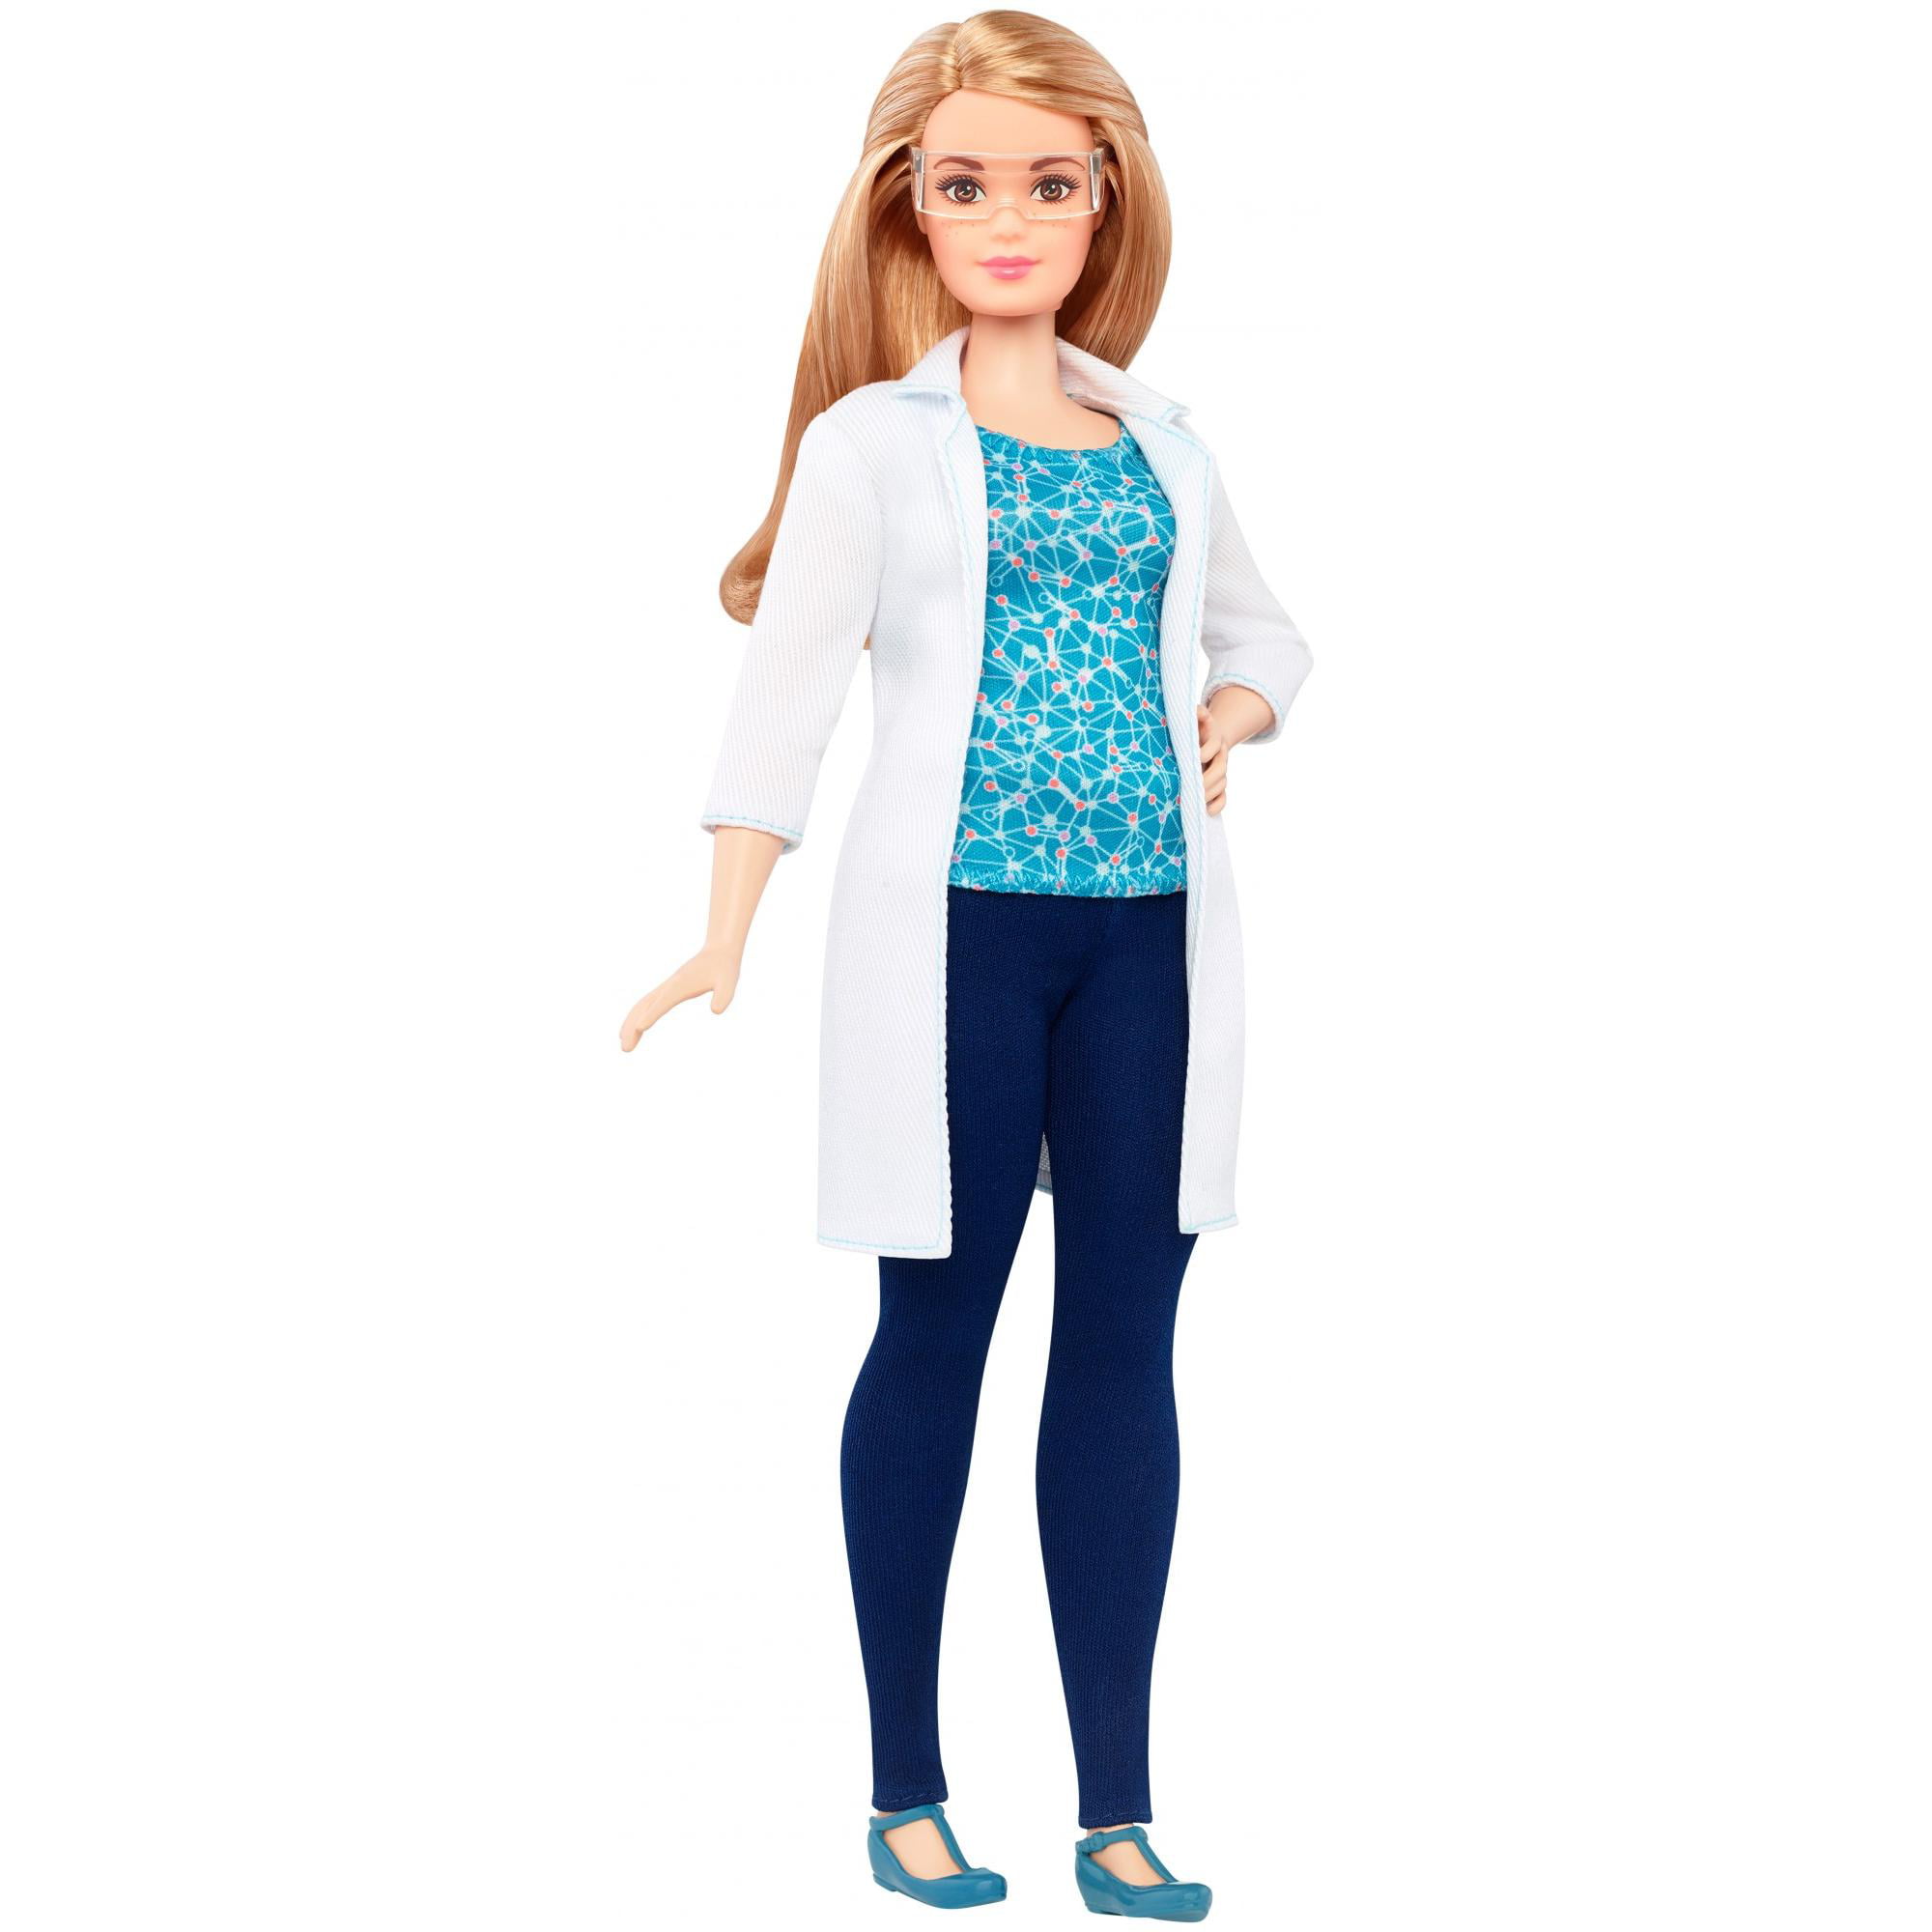 science barbie doll